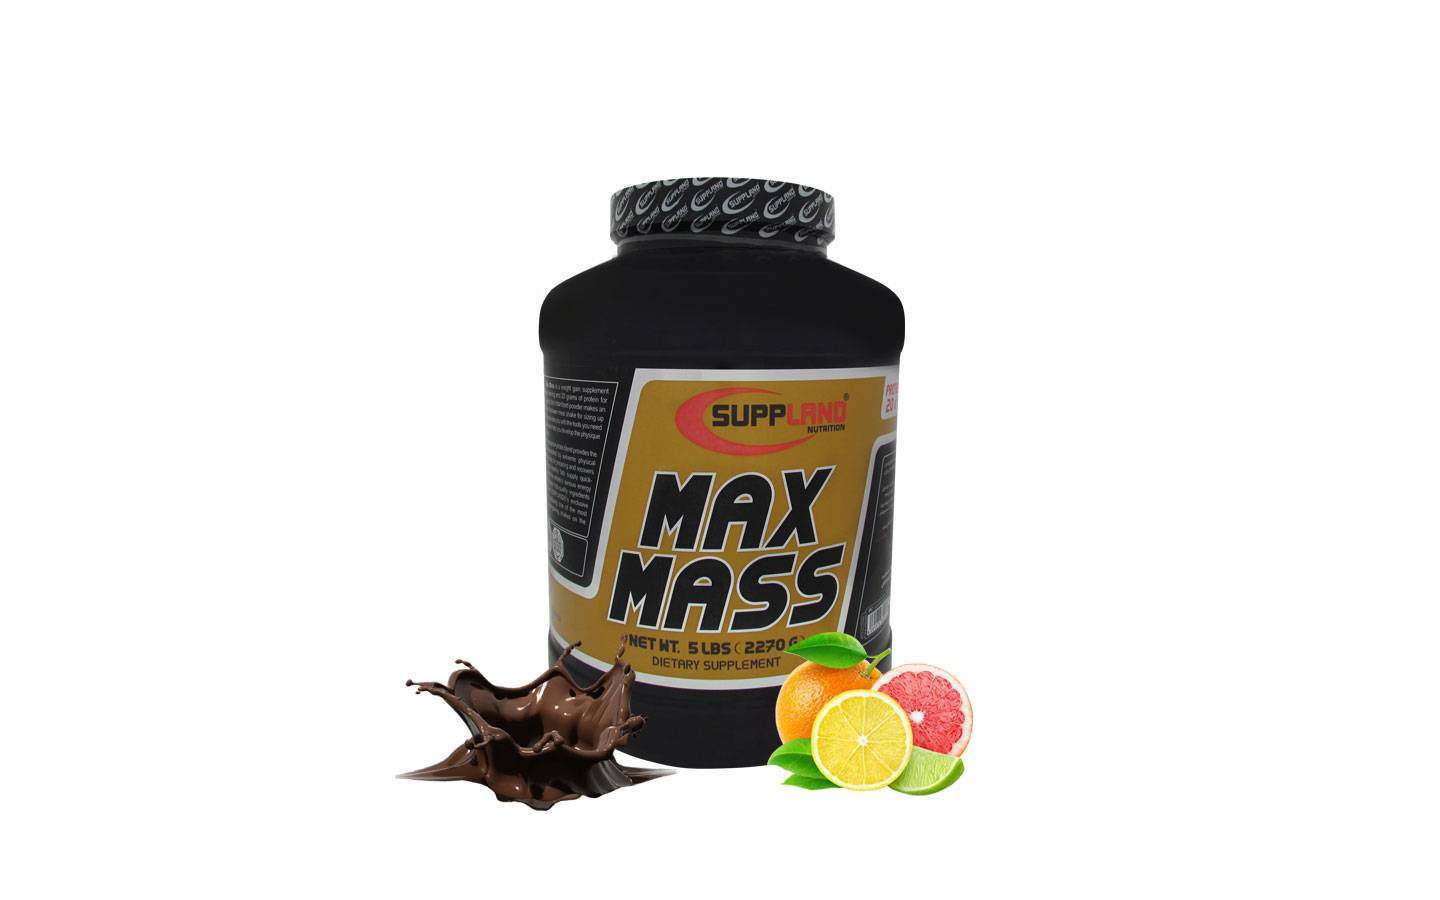 پودر مکس مس ساپلند نوتریشن 2270 گرمی Suppland Nutrition Max Mass Powder 2270 gr